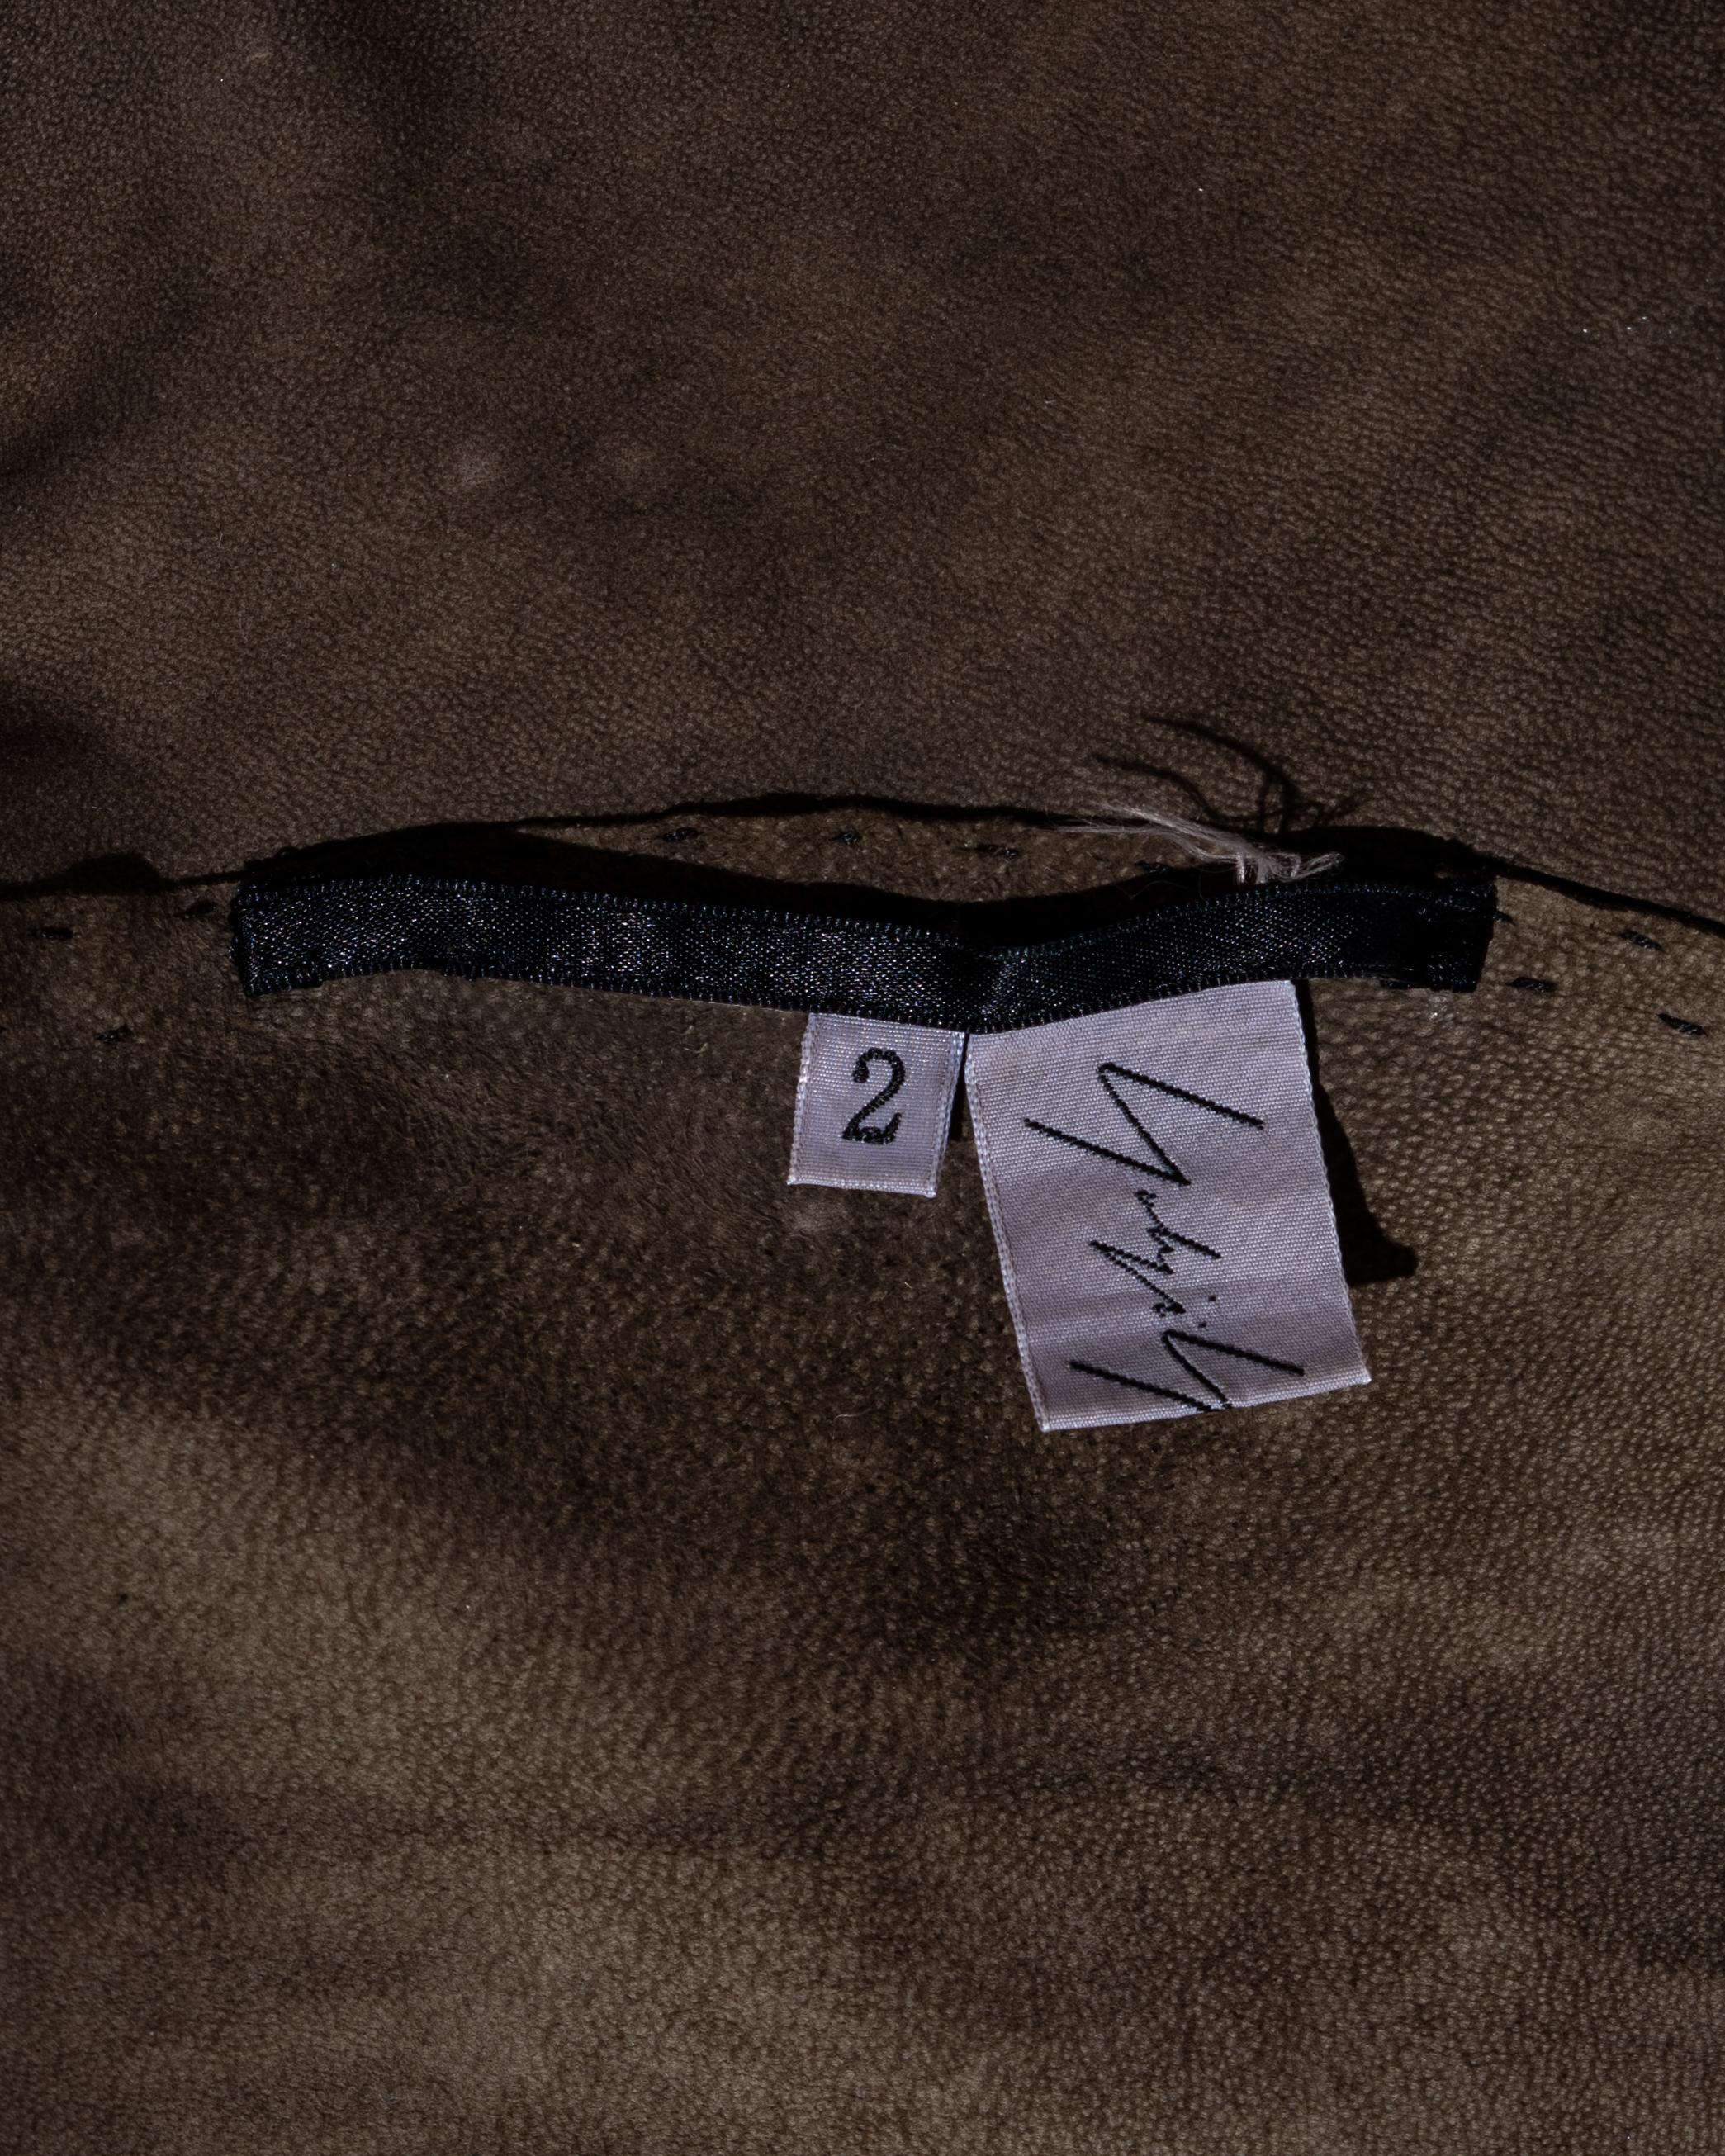 Yohji Yamamoto brown leather patchwork maxi dress, fw 2000 1